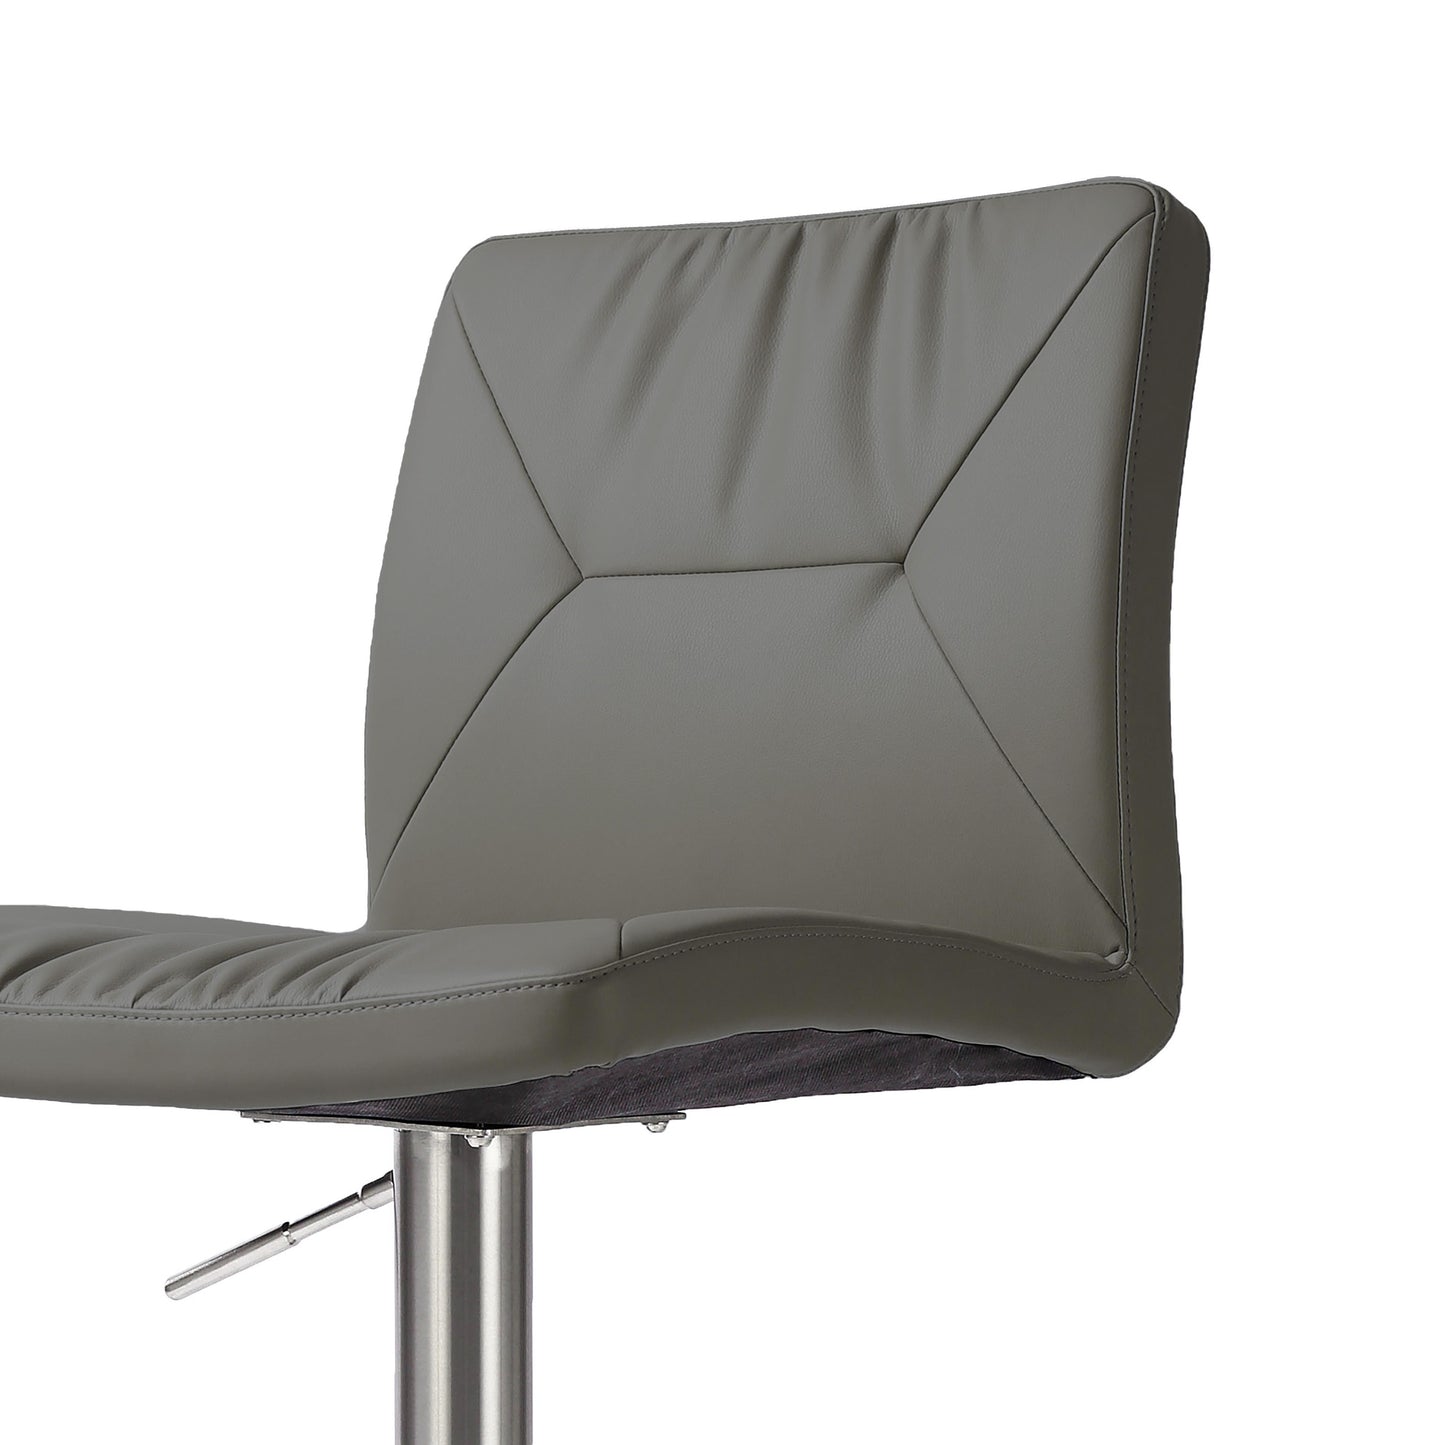 aya dark grey vegan leather on silver adjustable stool